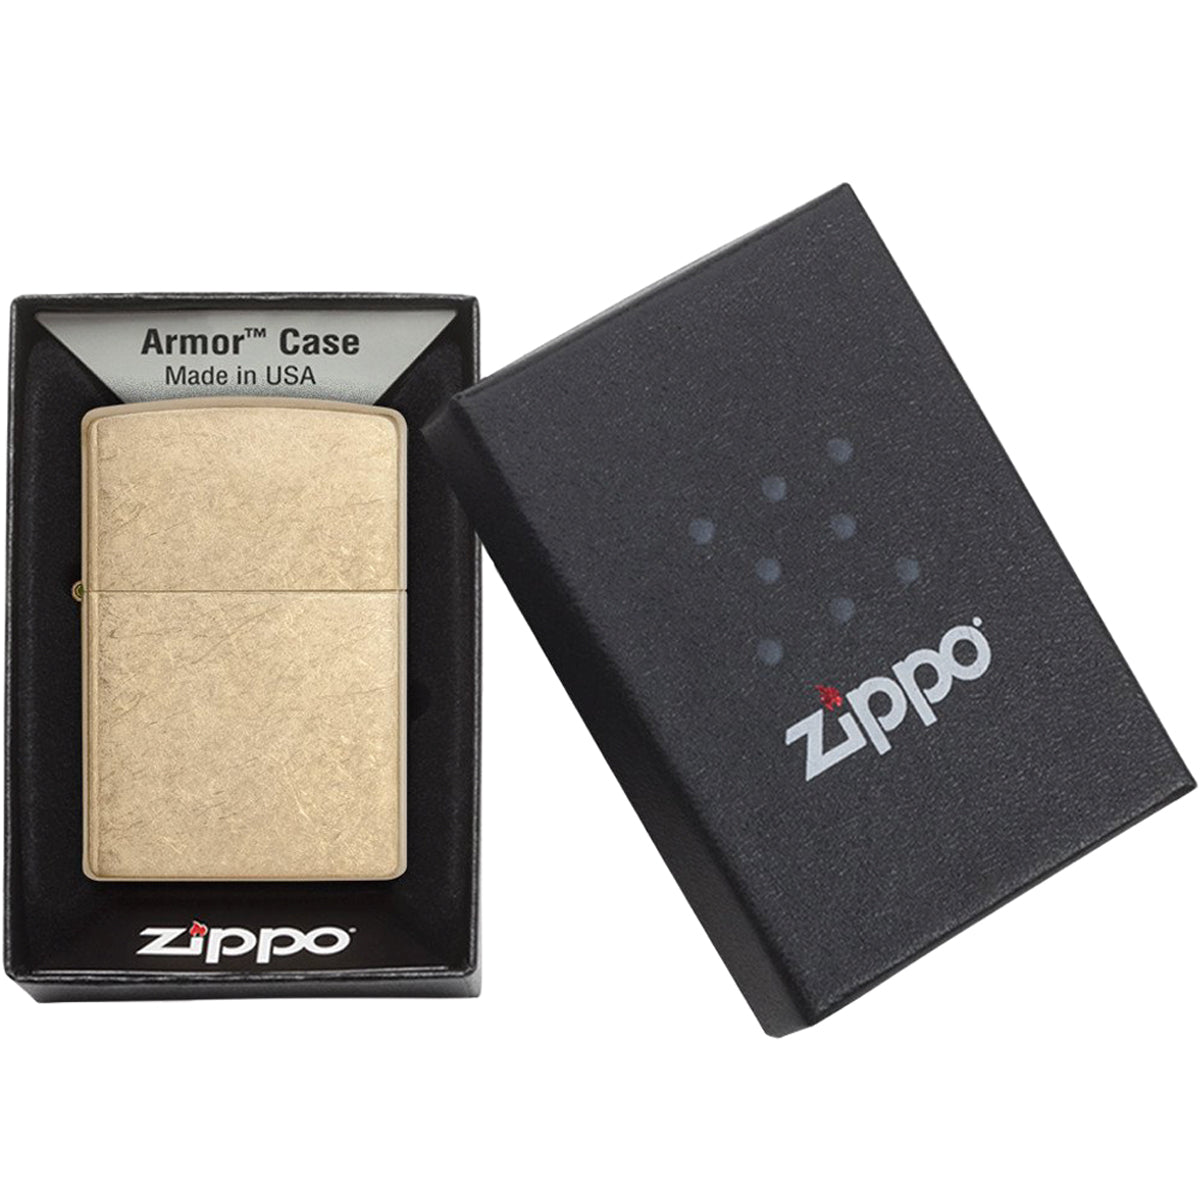 Zippo Armor Case Tumbled Brass Windproof Pocket Lighter Zippo